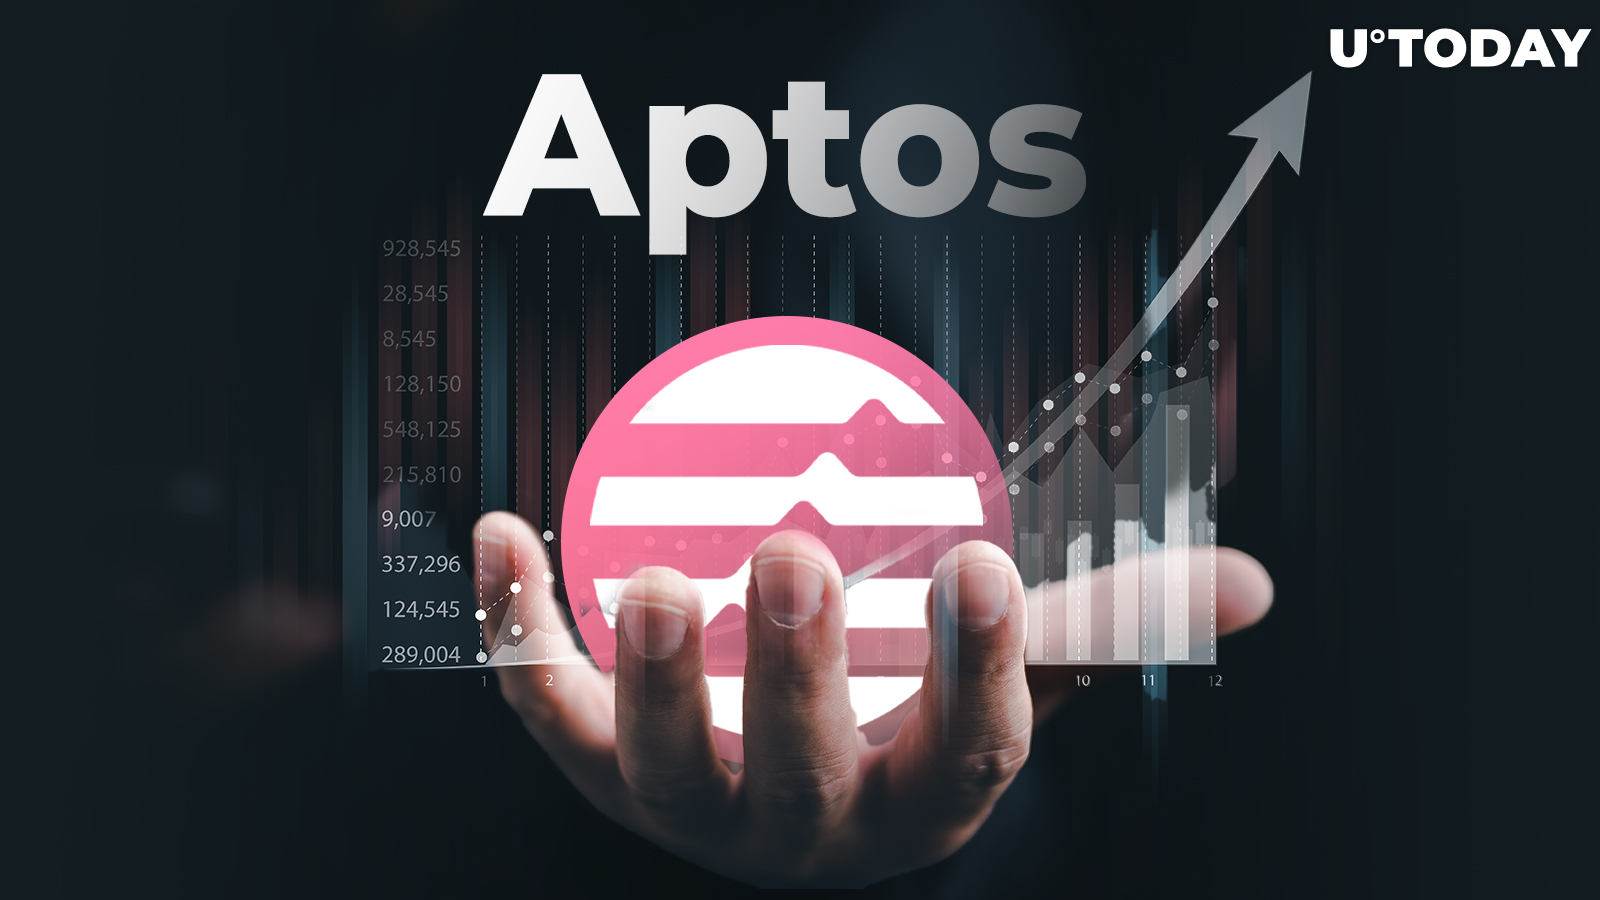 Aptos (APT) Skyrockets 11% Higher, Here's What's Behind It